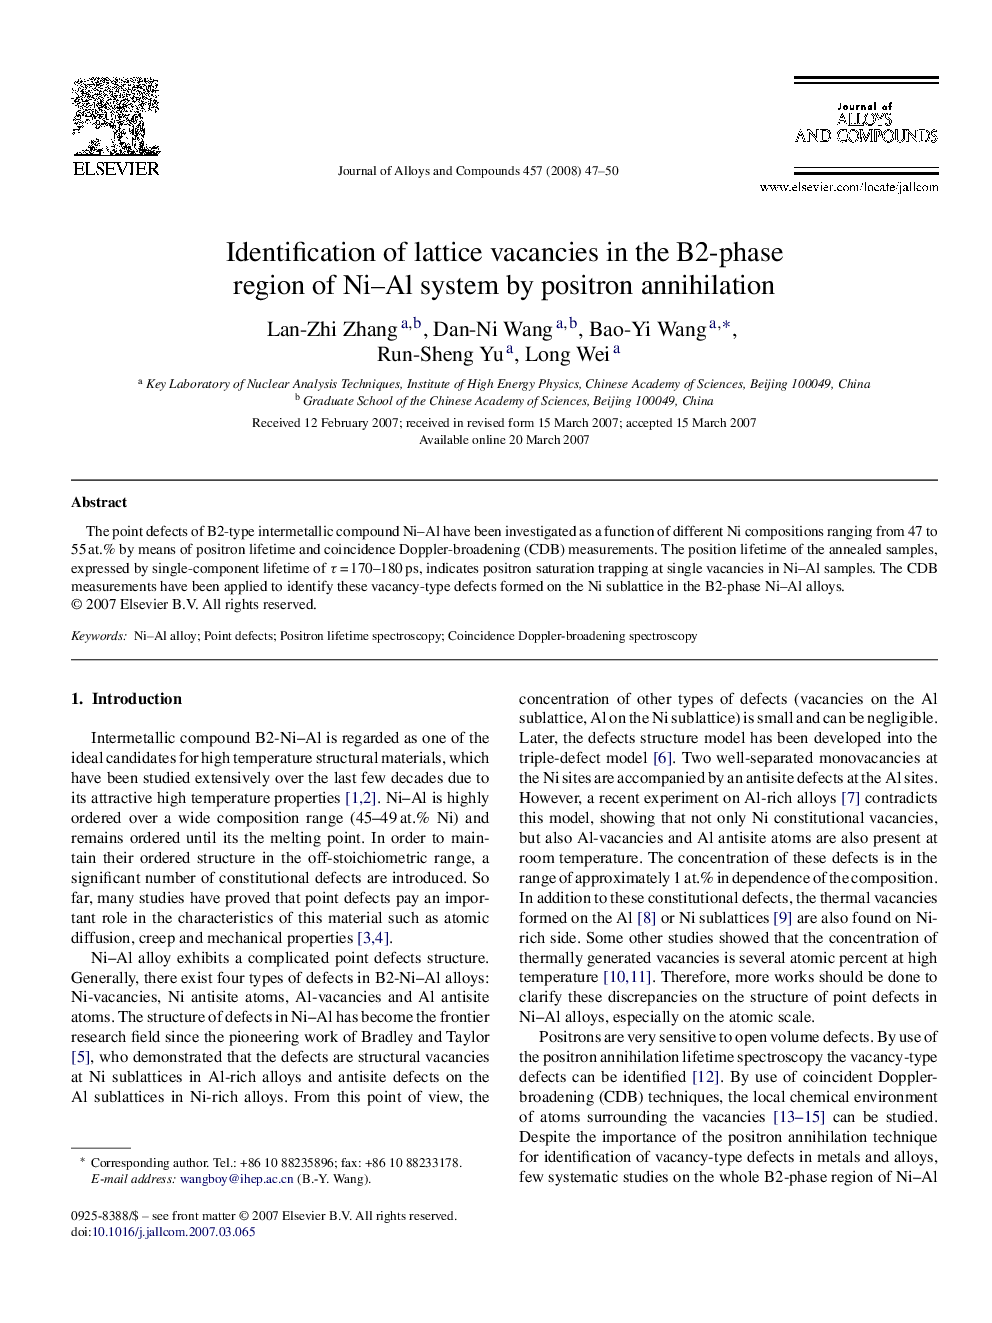 Identification of lattice vacancies in the B2-phase region of Ni–Al system by positron annihilation